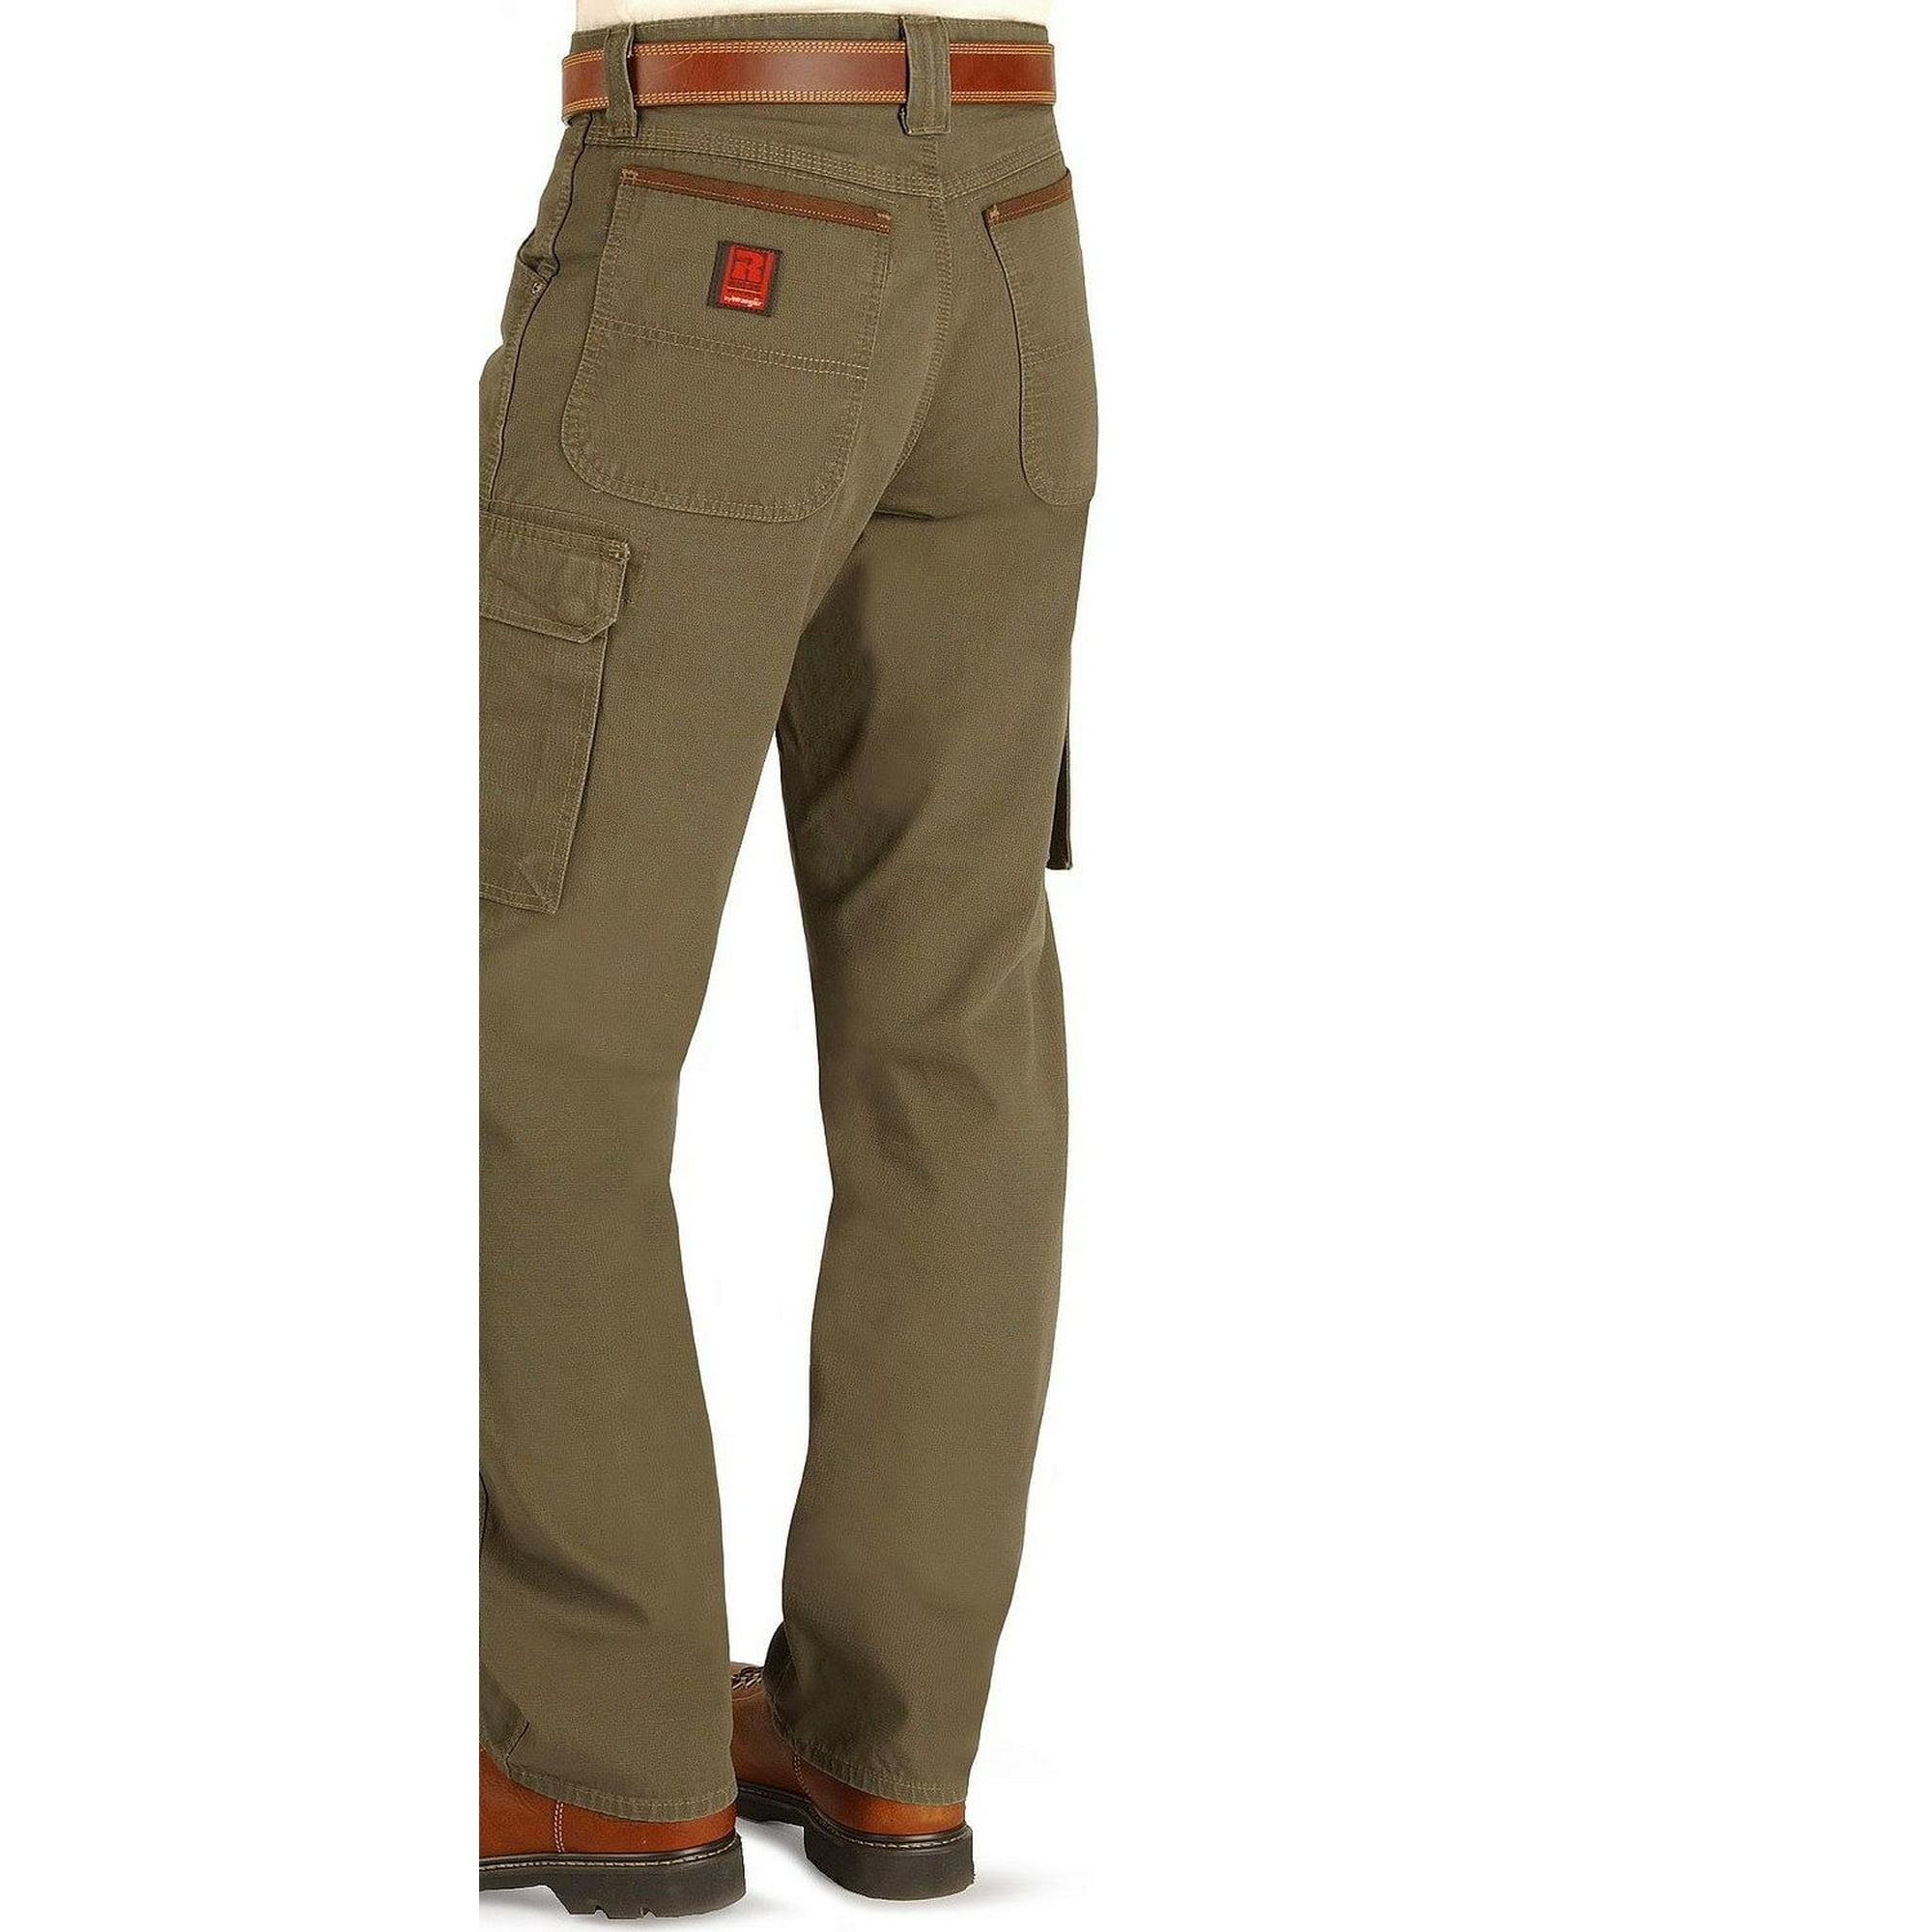 Wrangler Riggs Workwear Men's Ranger Pant, Loden,40 x 30 | Walmart Canada